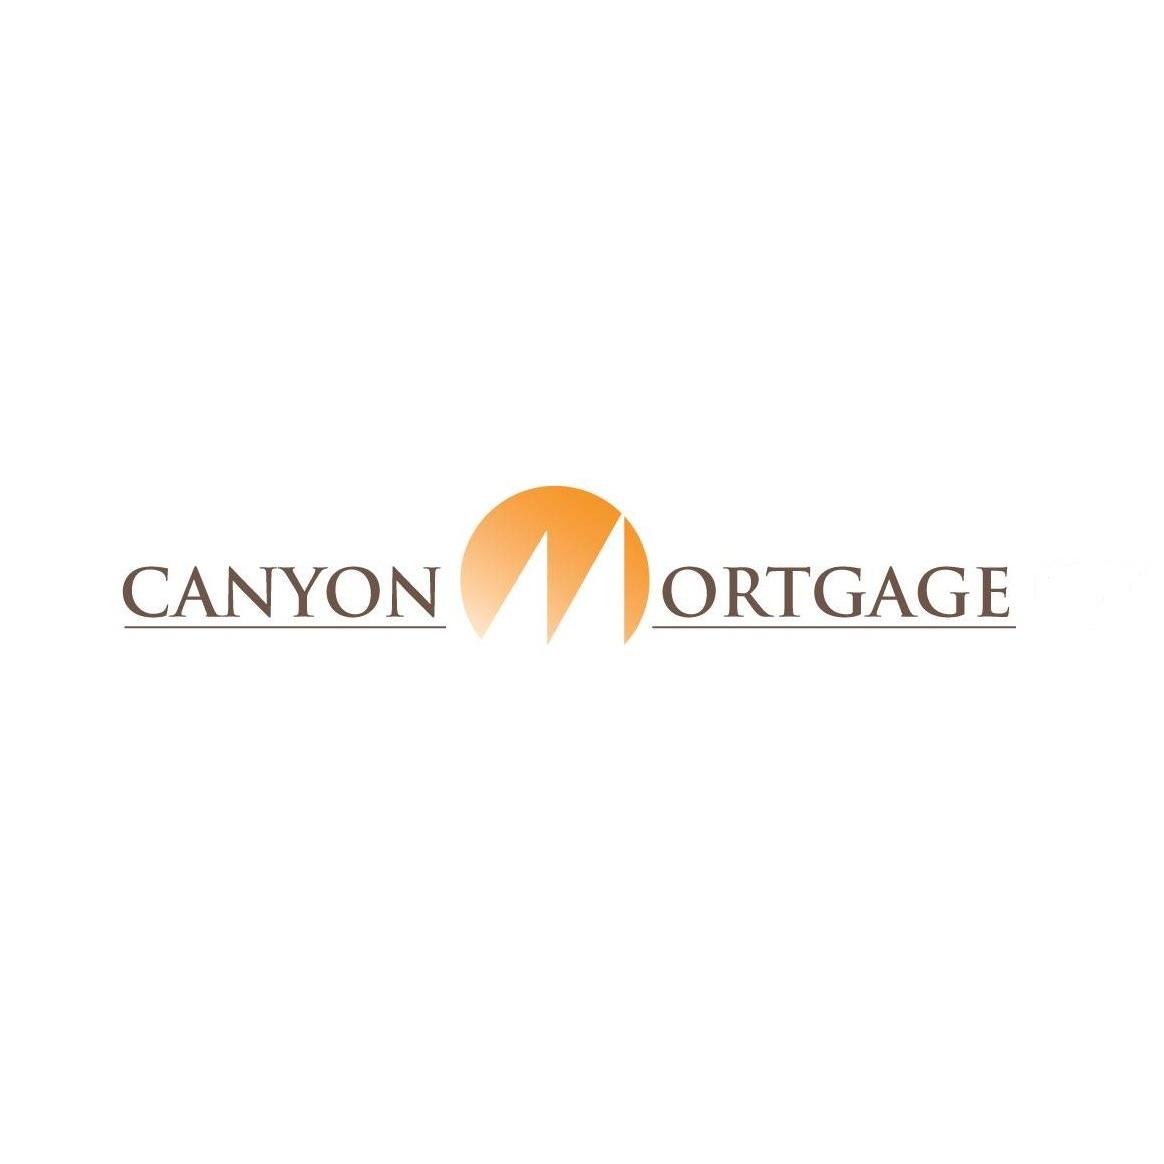 Canyon Mortgage - East Rockaway Logo